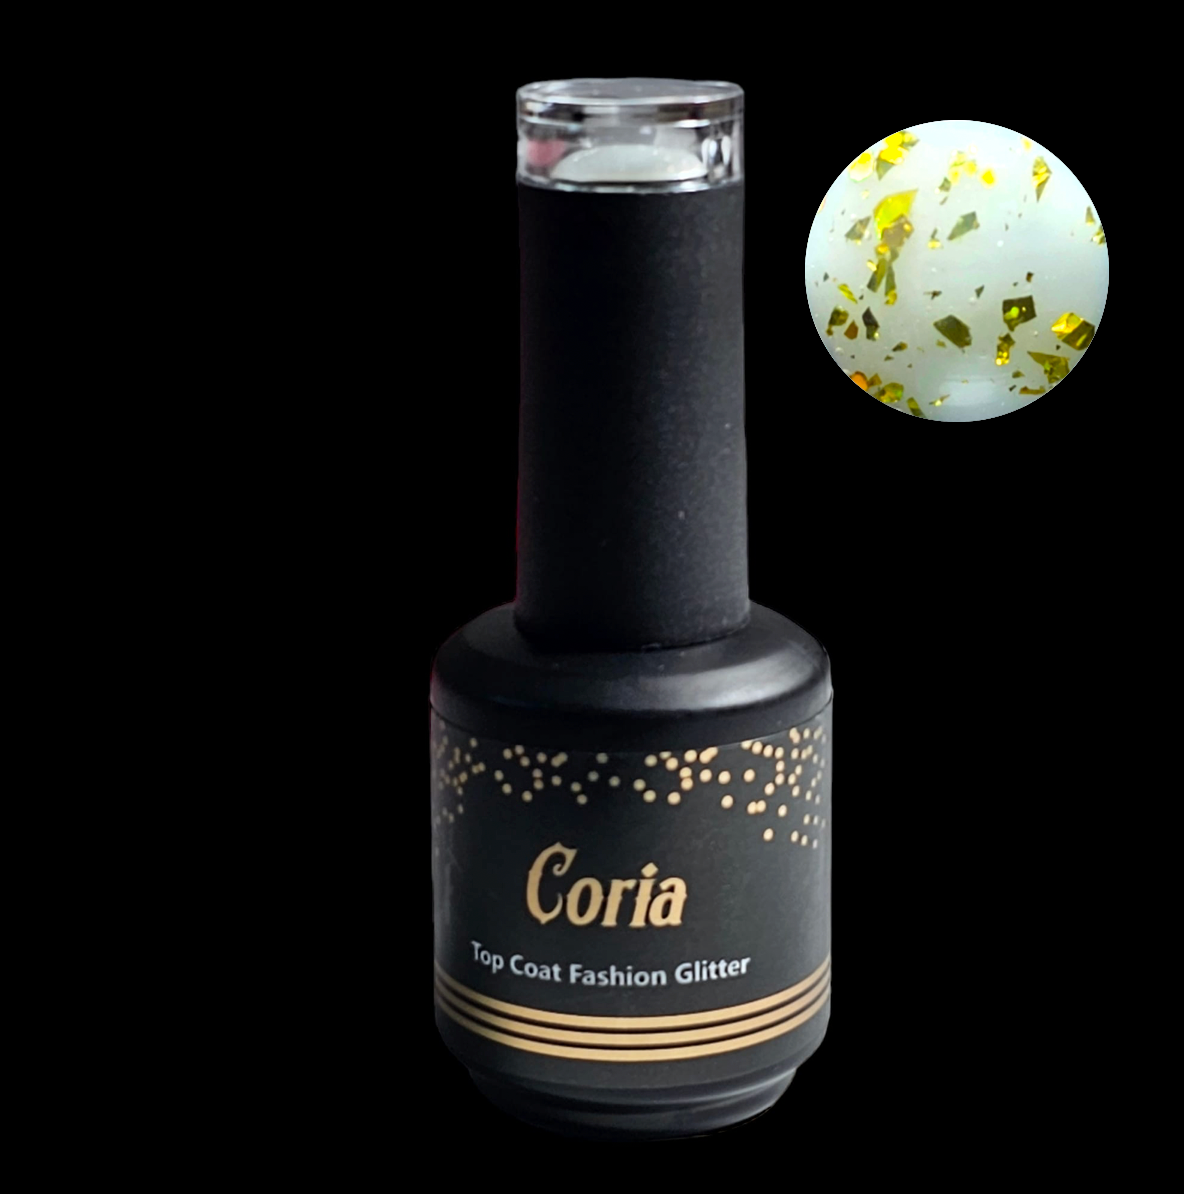 Top Coat Fashion Glitter Coria 15 ml 120